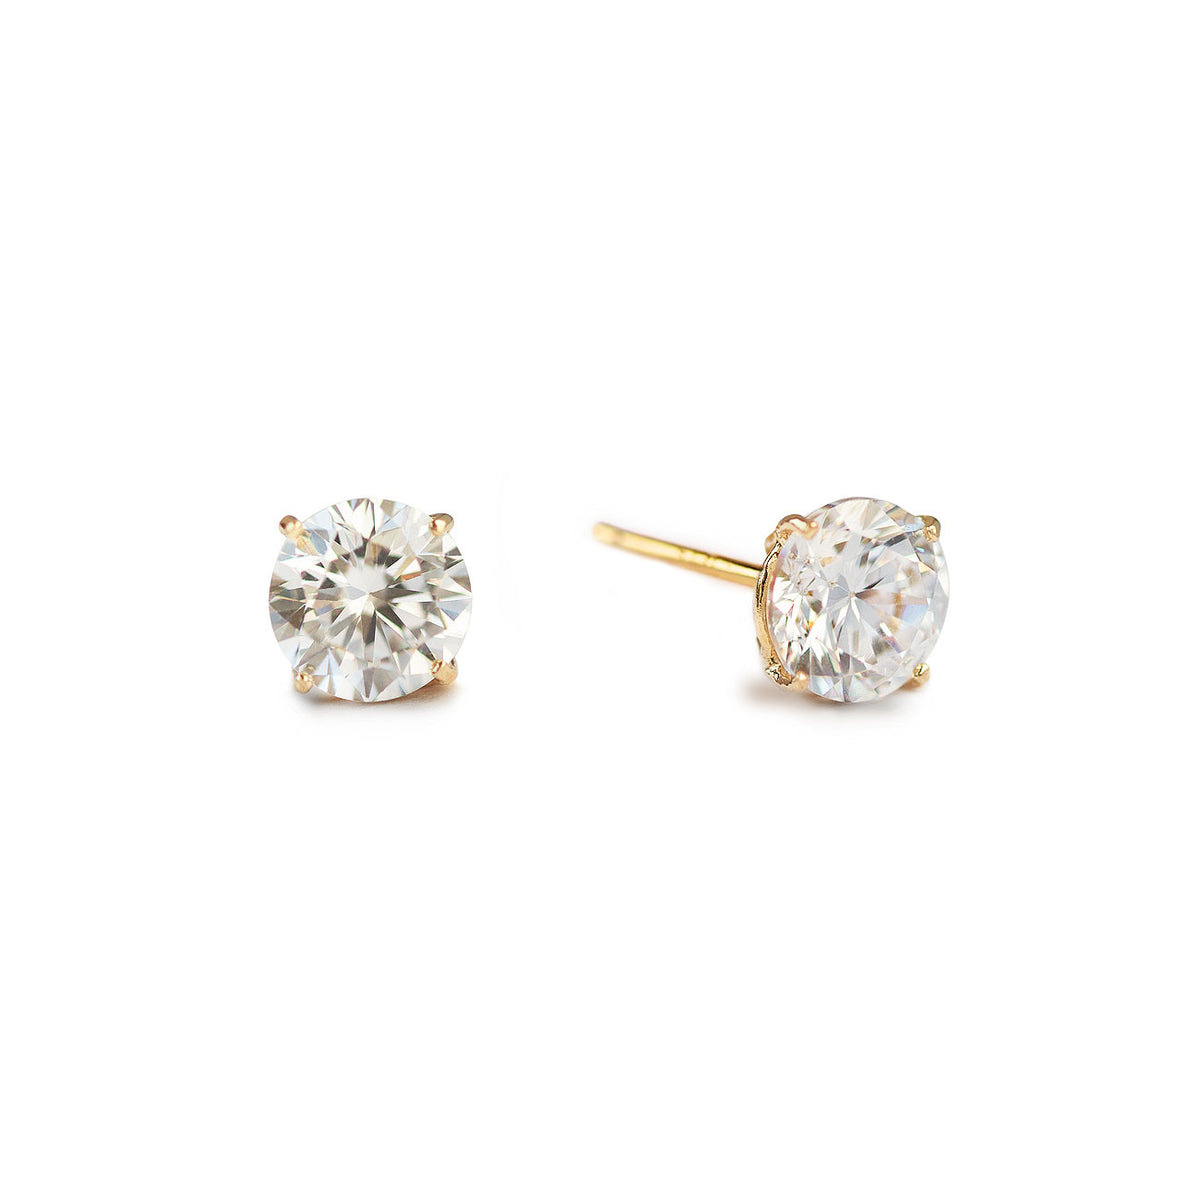 20g Gold Earrings White or Yellow 14k Pair 5mm CZ Gemstones